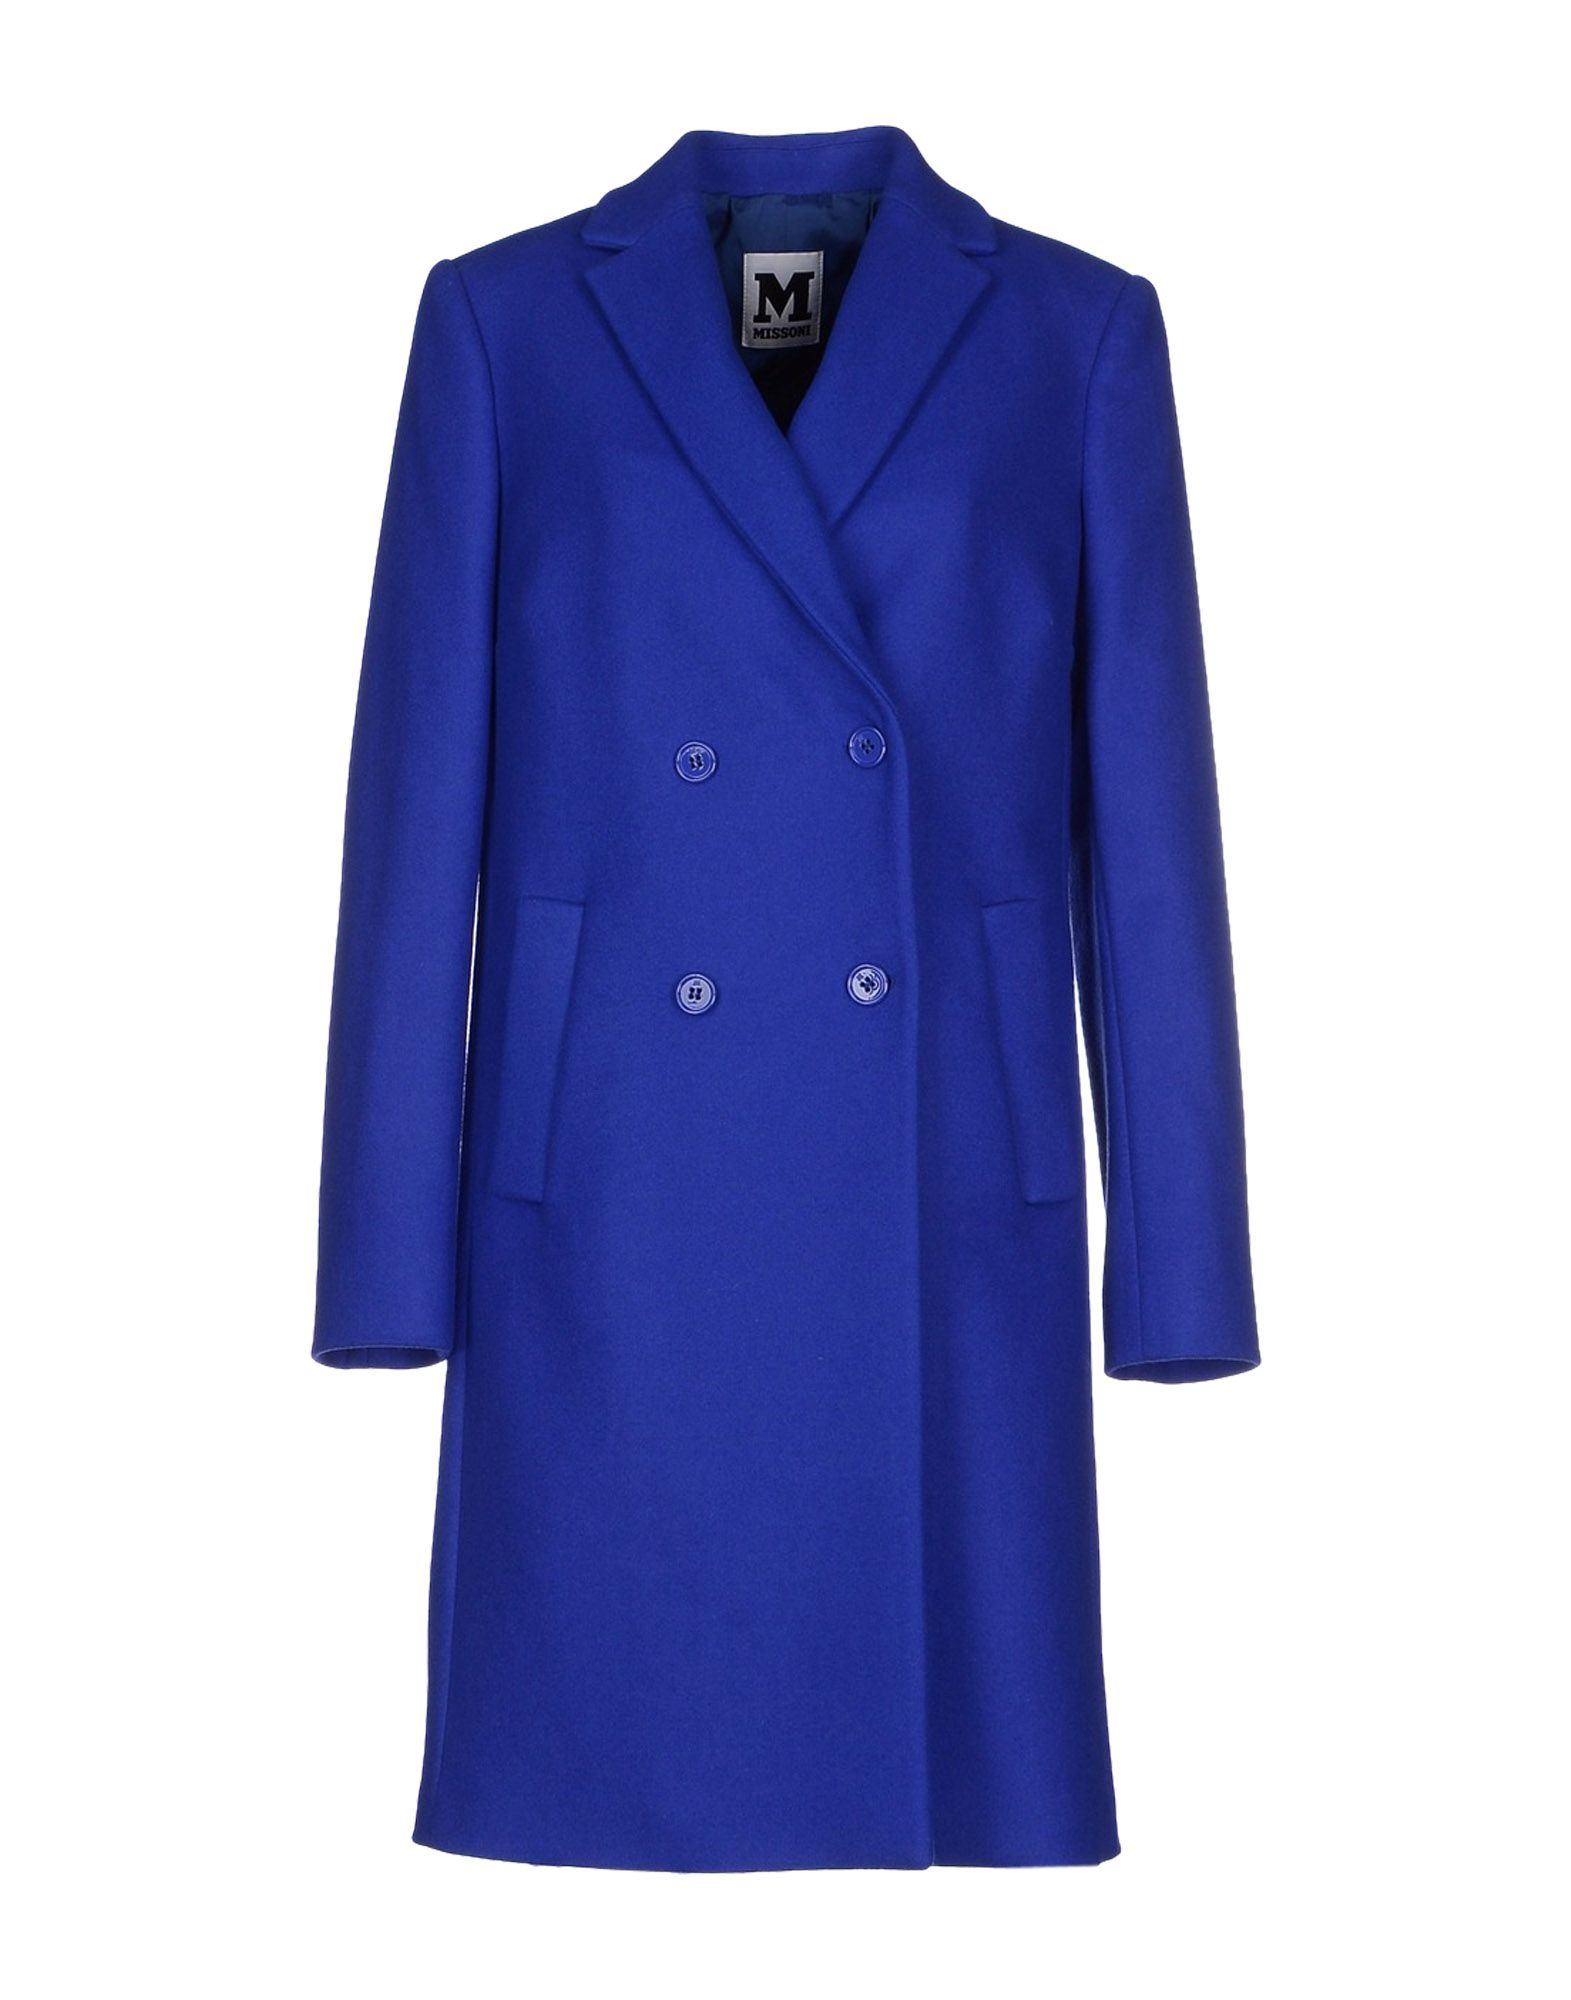 M missoni Coat in Blue (Bright blue) | Lyst